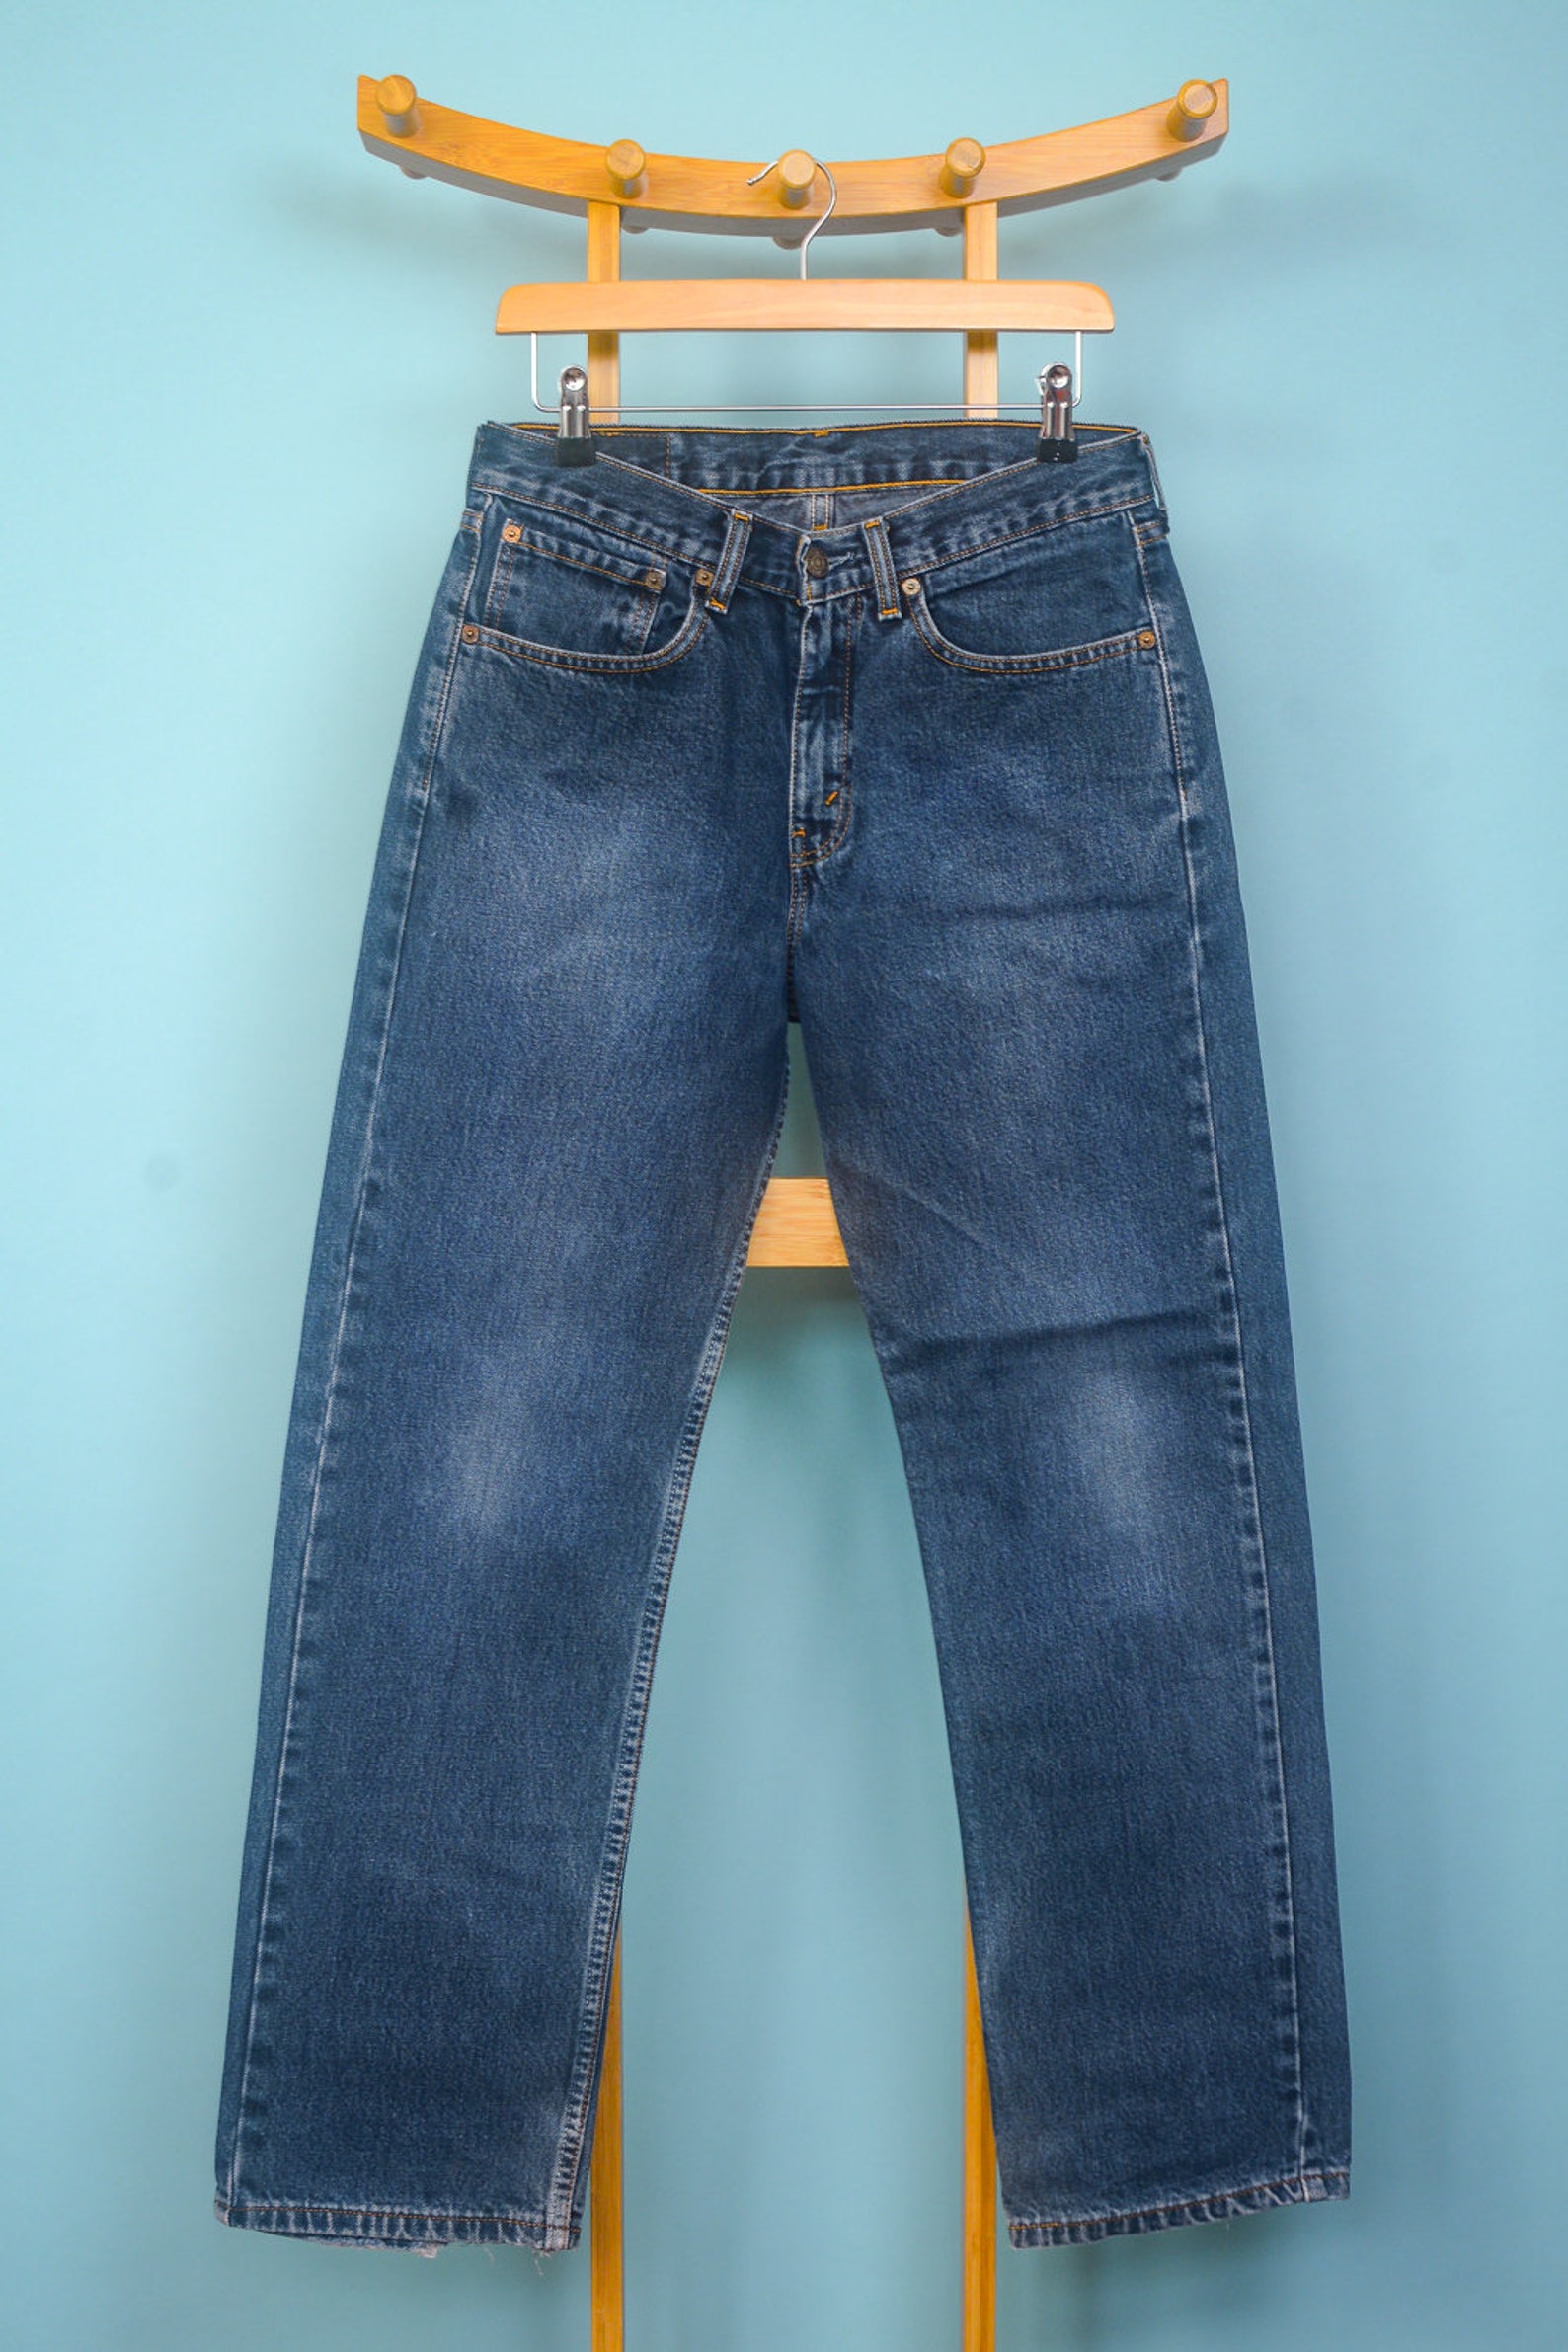 Levi 751 Jeans Blue Straight Leg Zip Fly Vintage Men's | Etsy